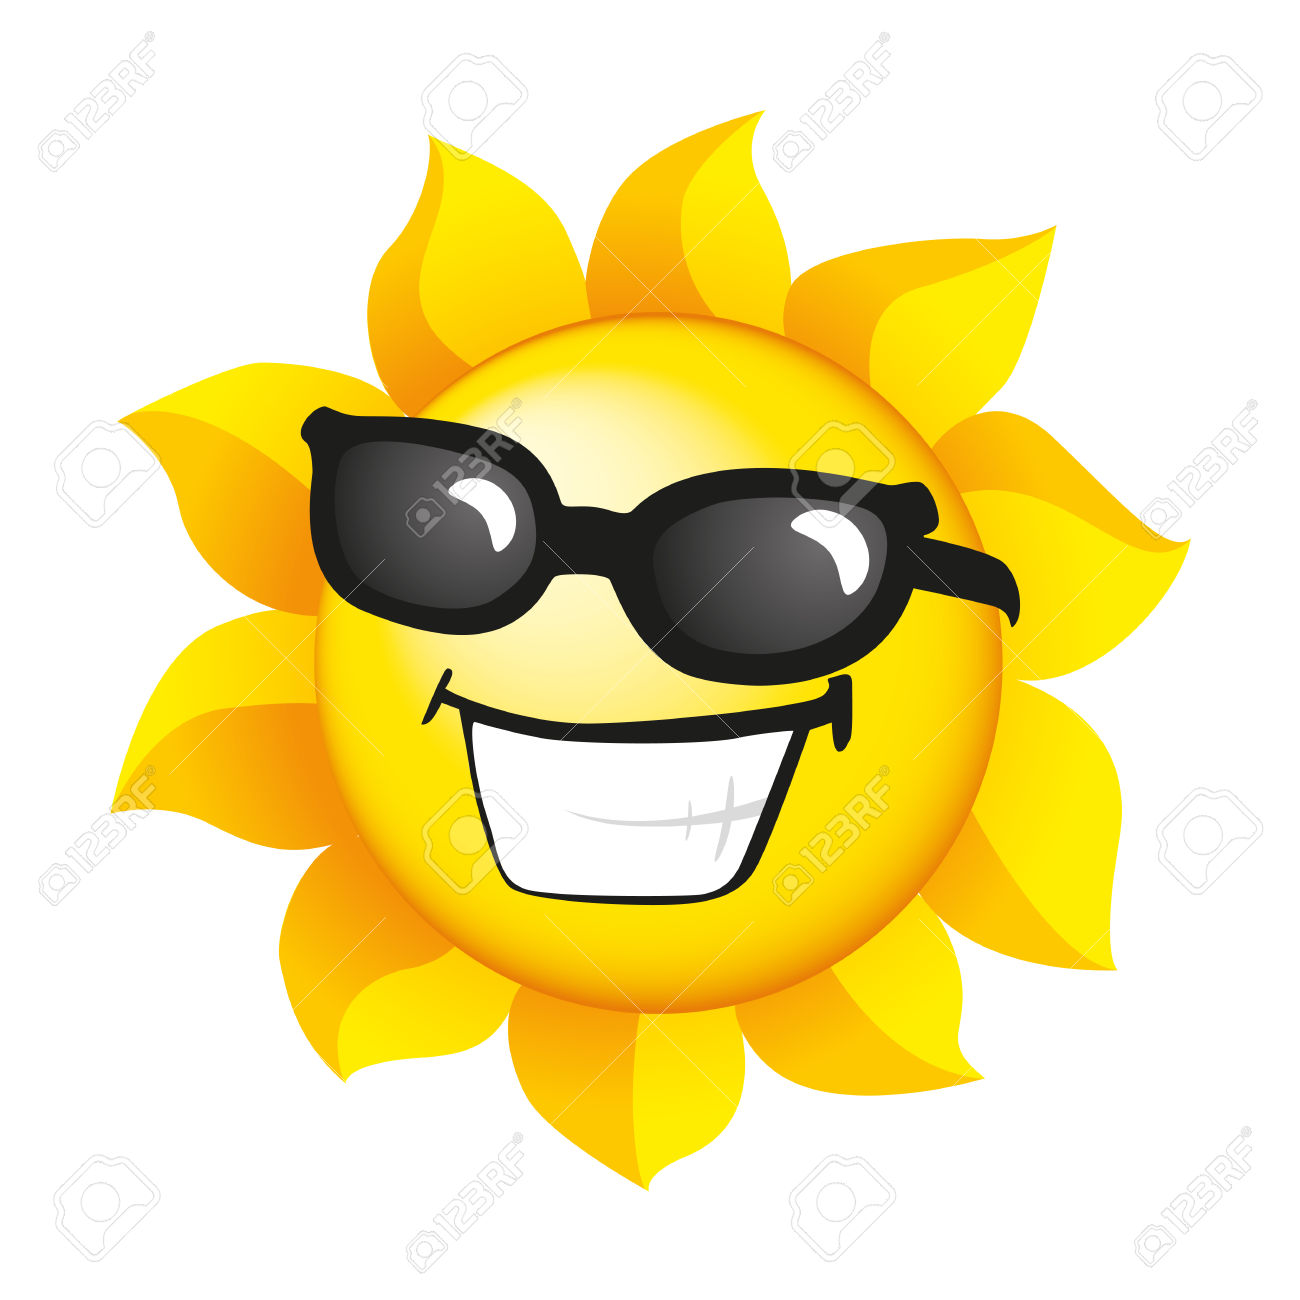 sunshine wearing sunglasses